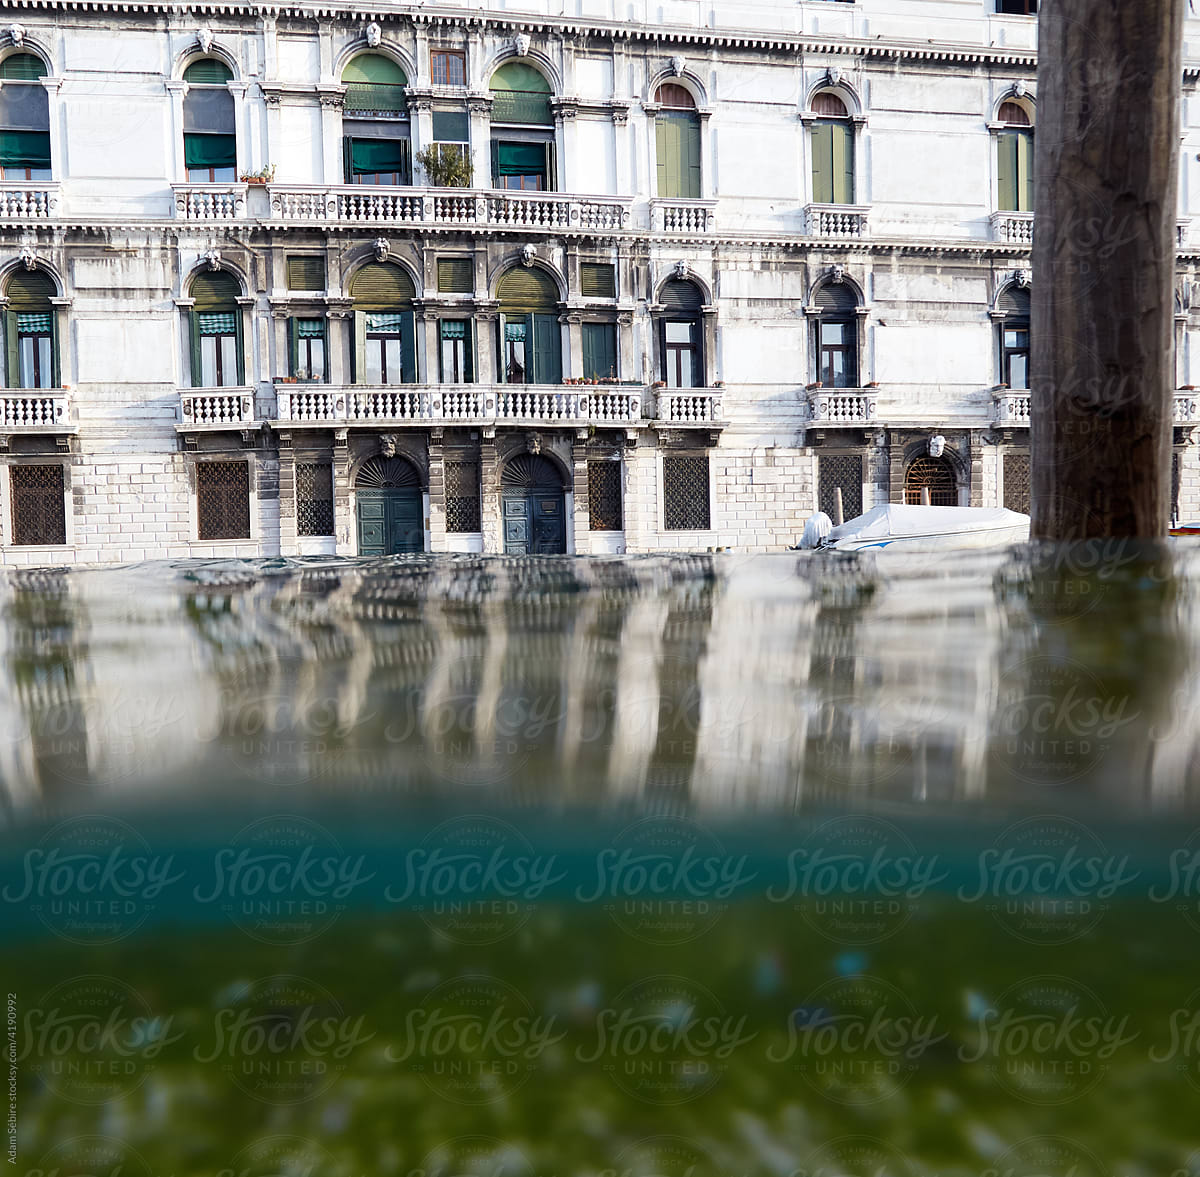 High tide floods in Venice - building underwater